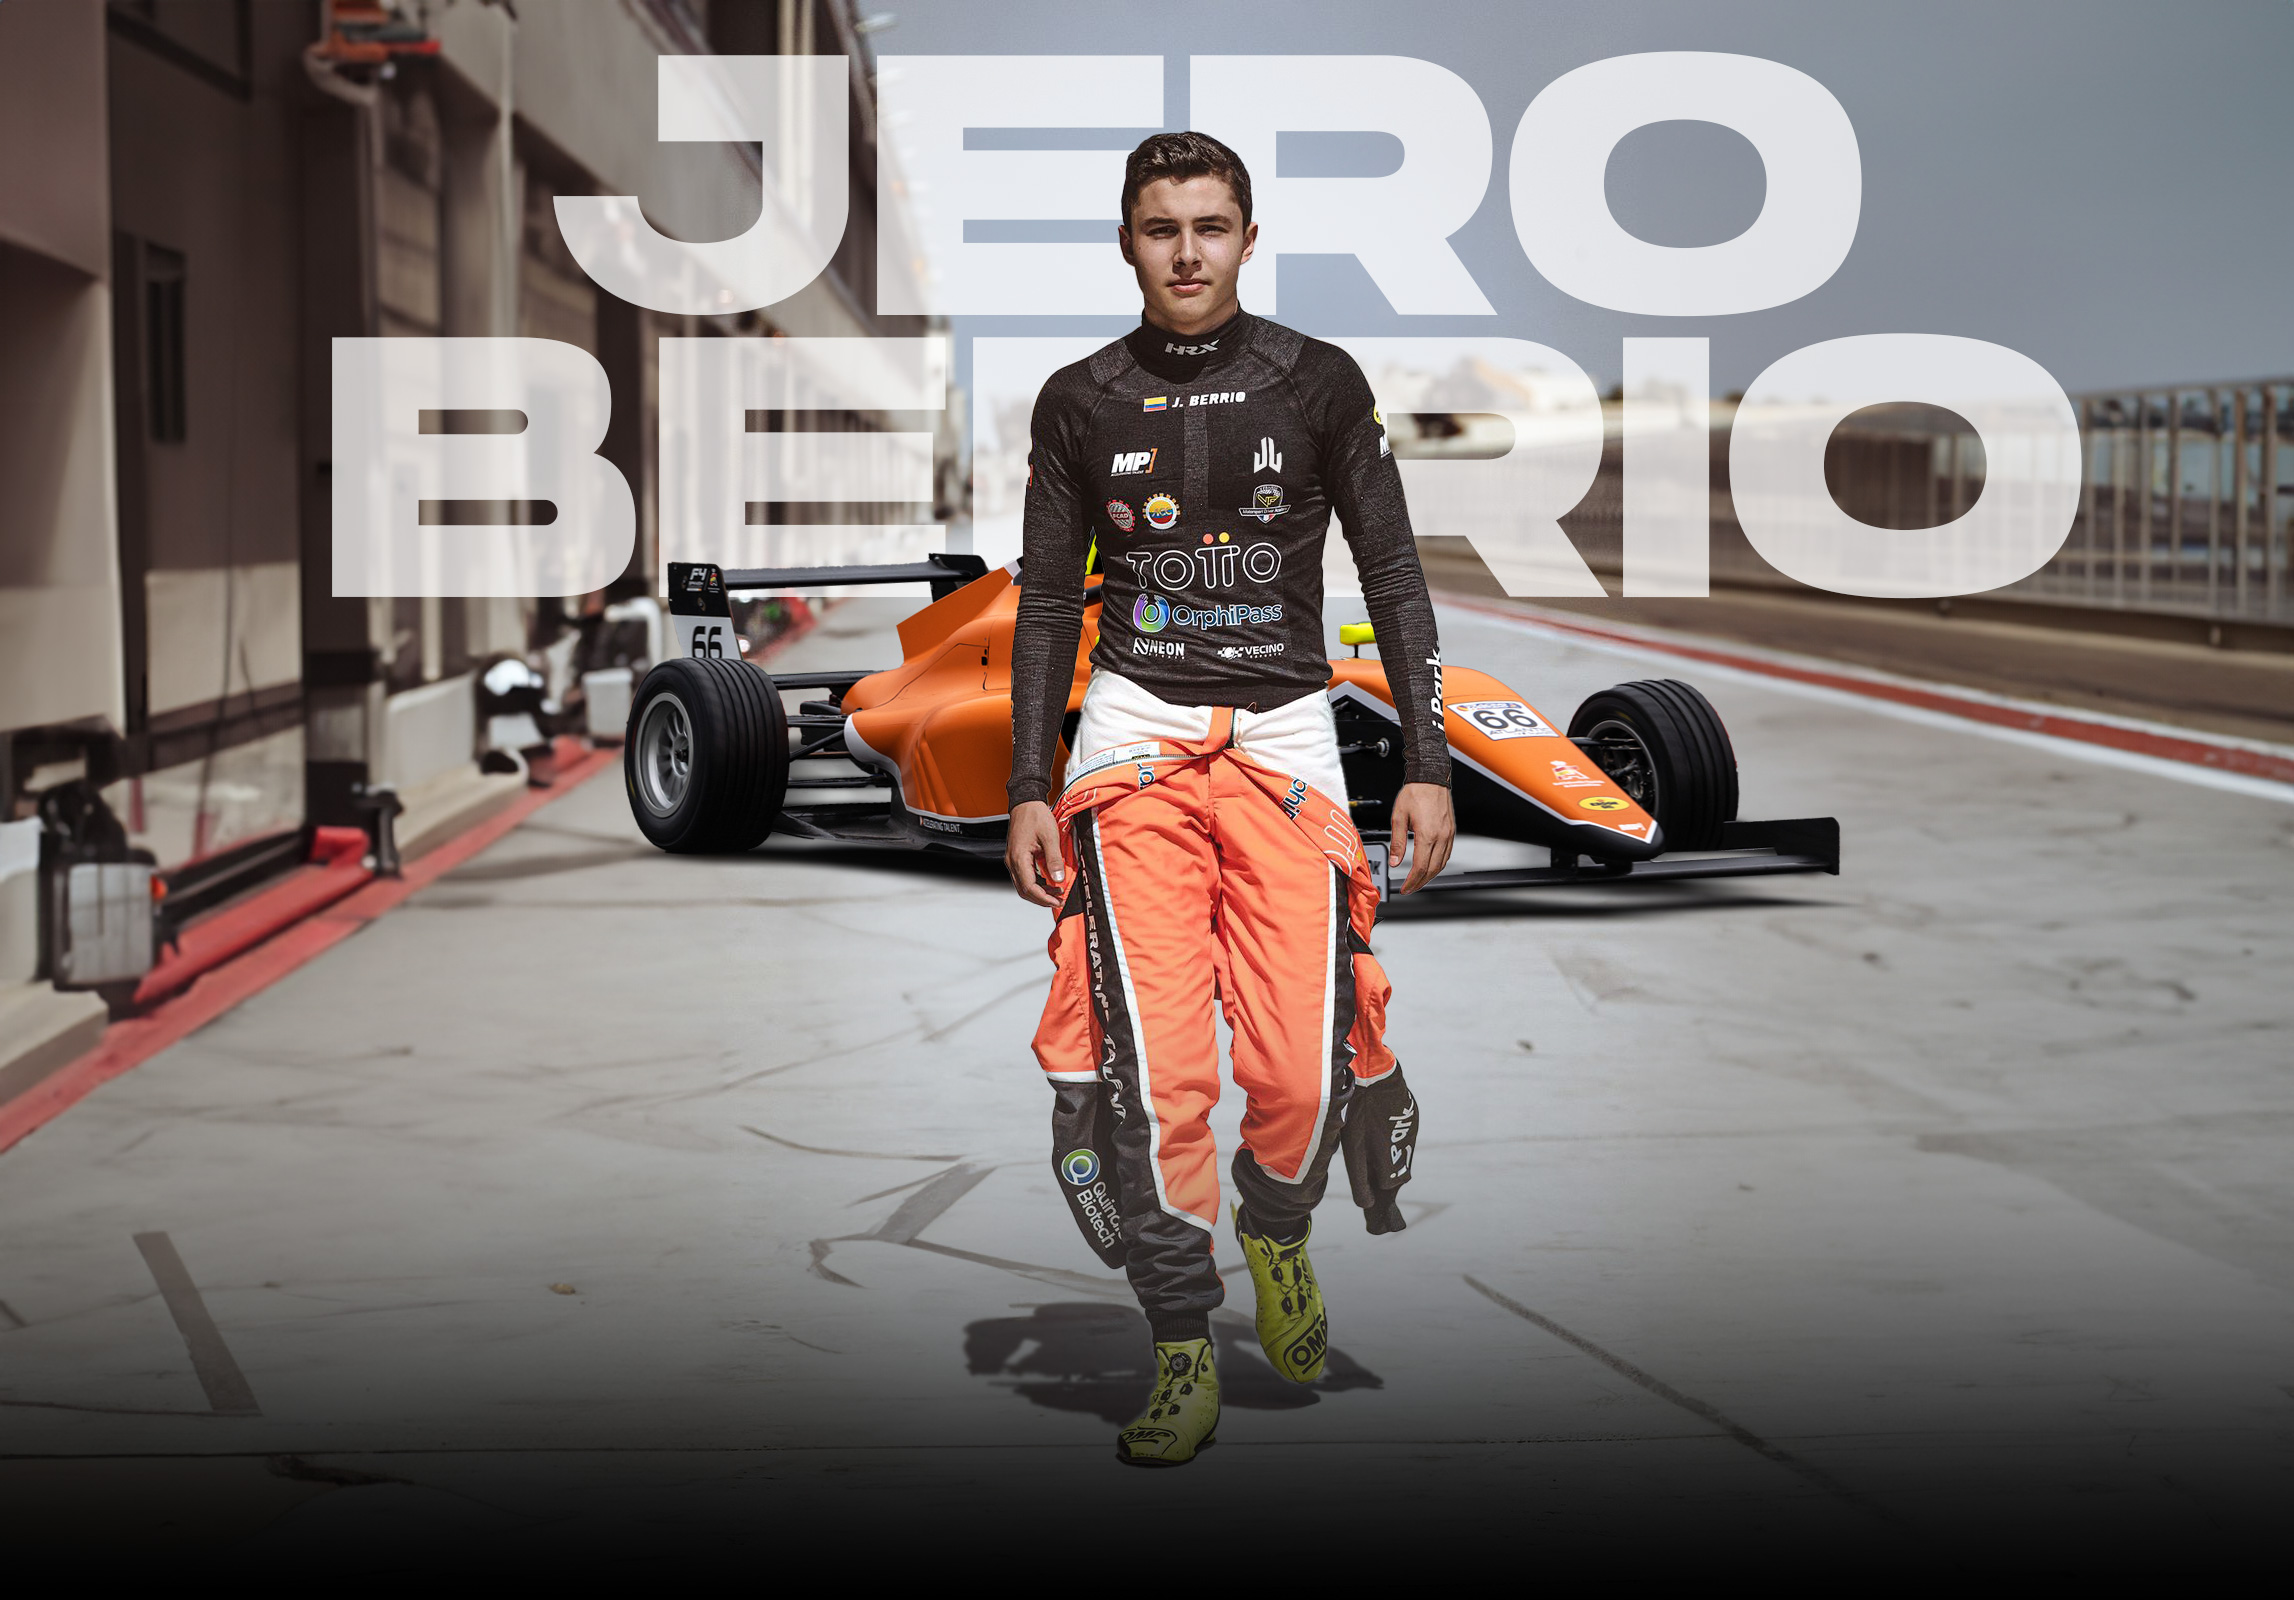 Braindy Revving Up Jero Berrio’s Brand to Match His Racing Legacy